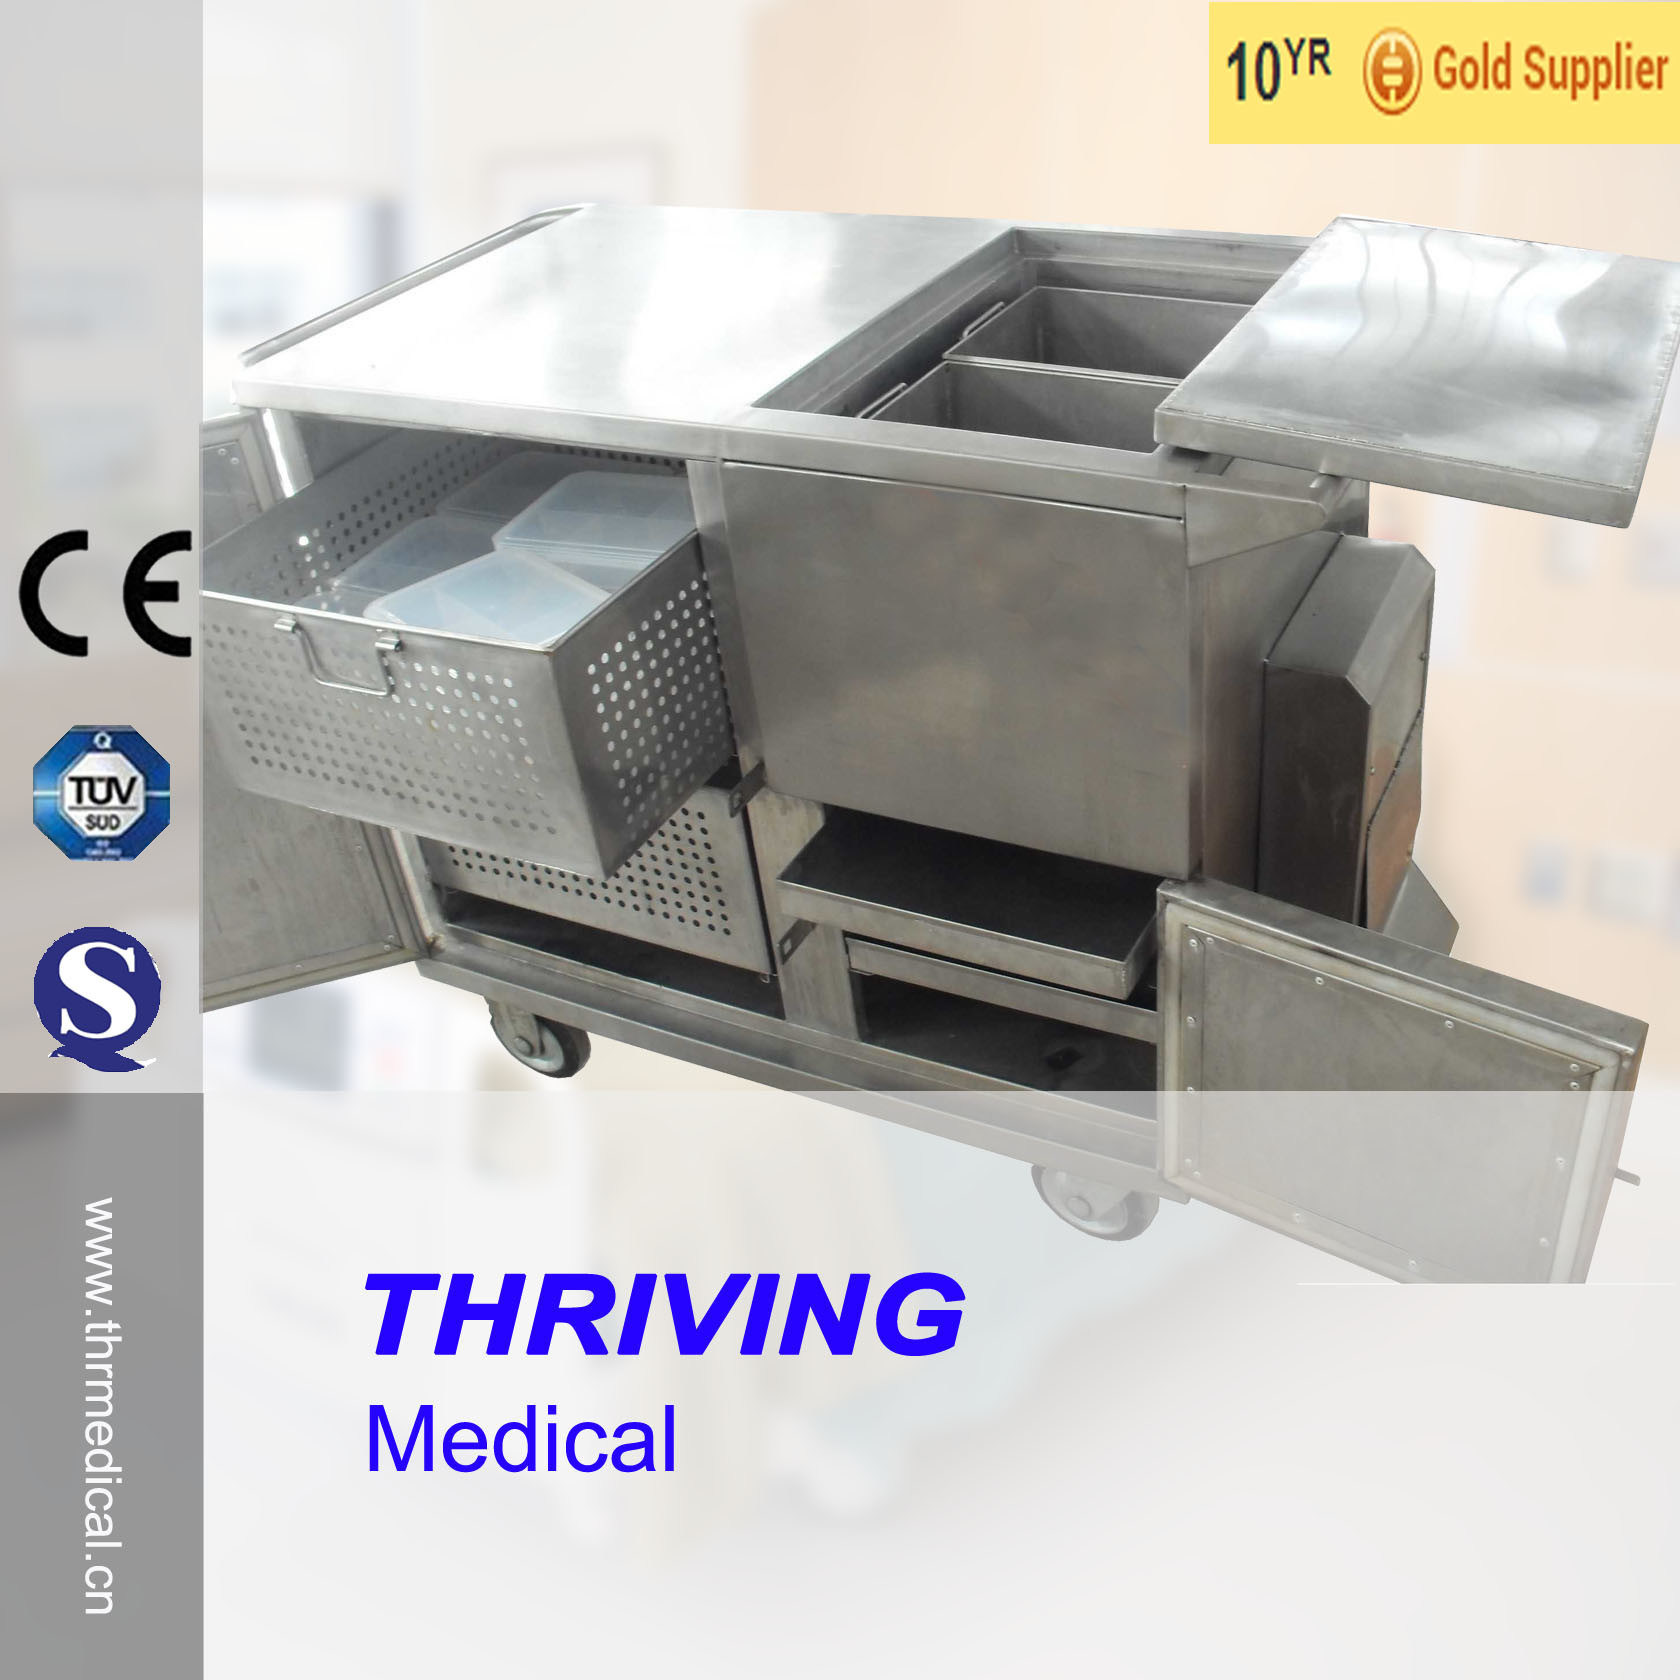 Thr-FC004 Stainless Steel Hospital Food Trolley